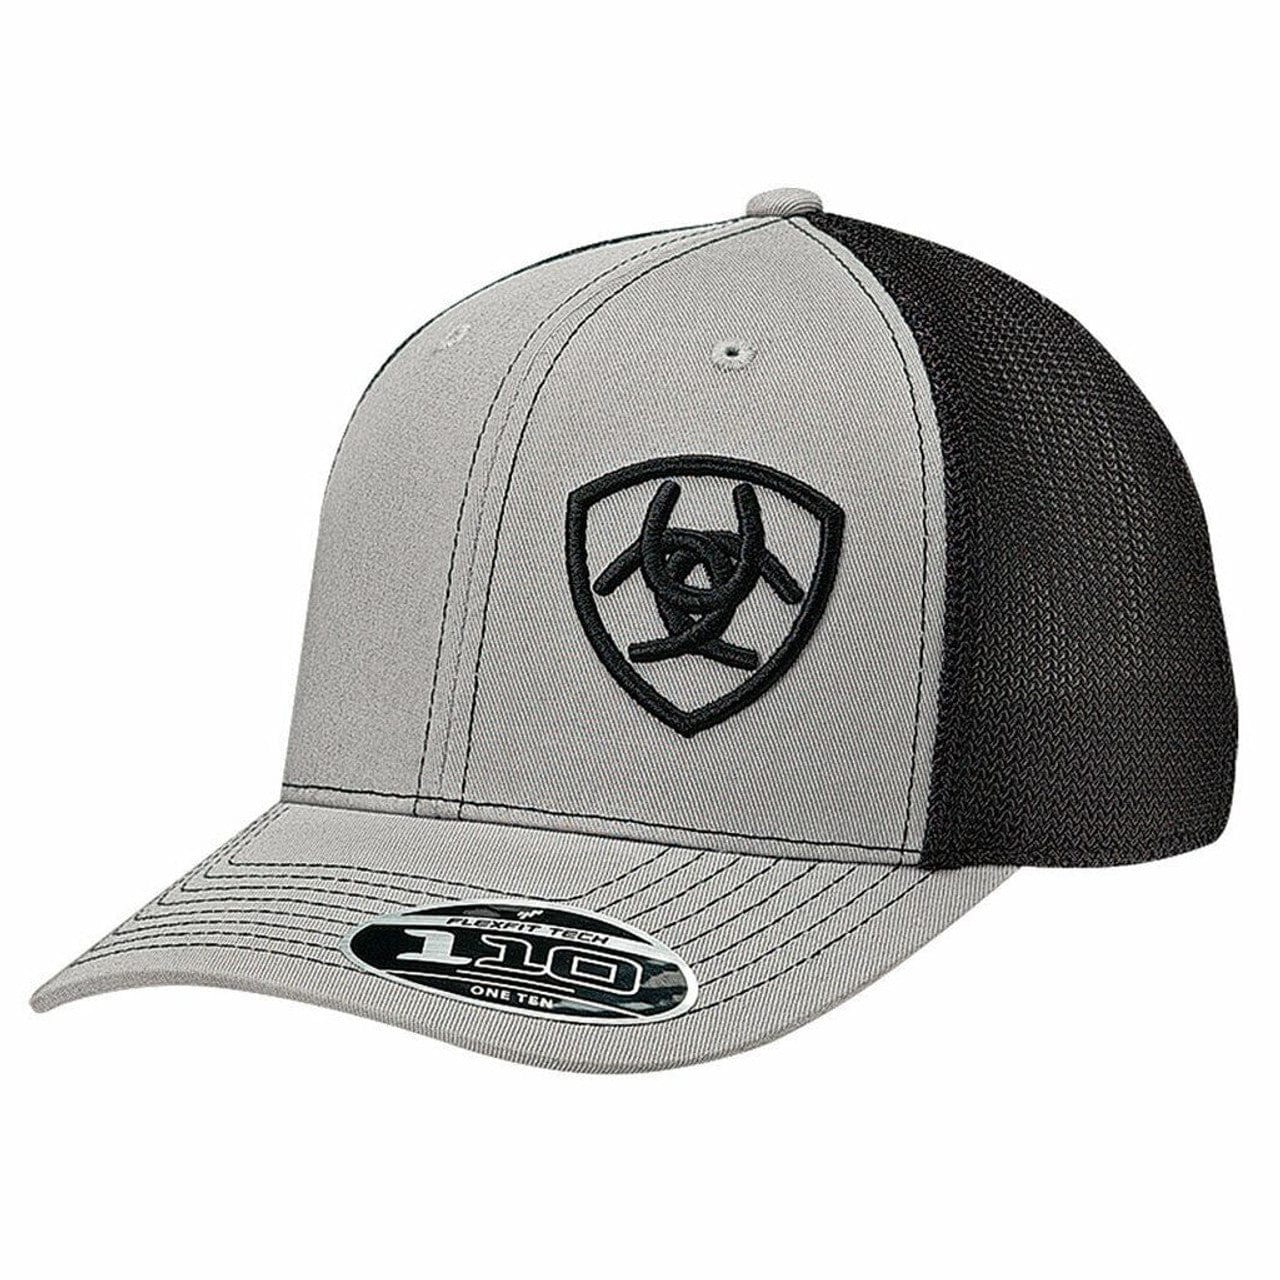 M&F WESTERN Hats Ariat Men's Grey/Black Offset Logo Cap 1597706